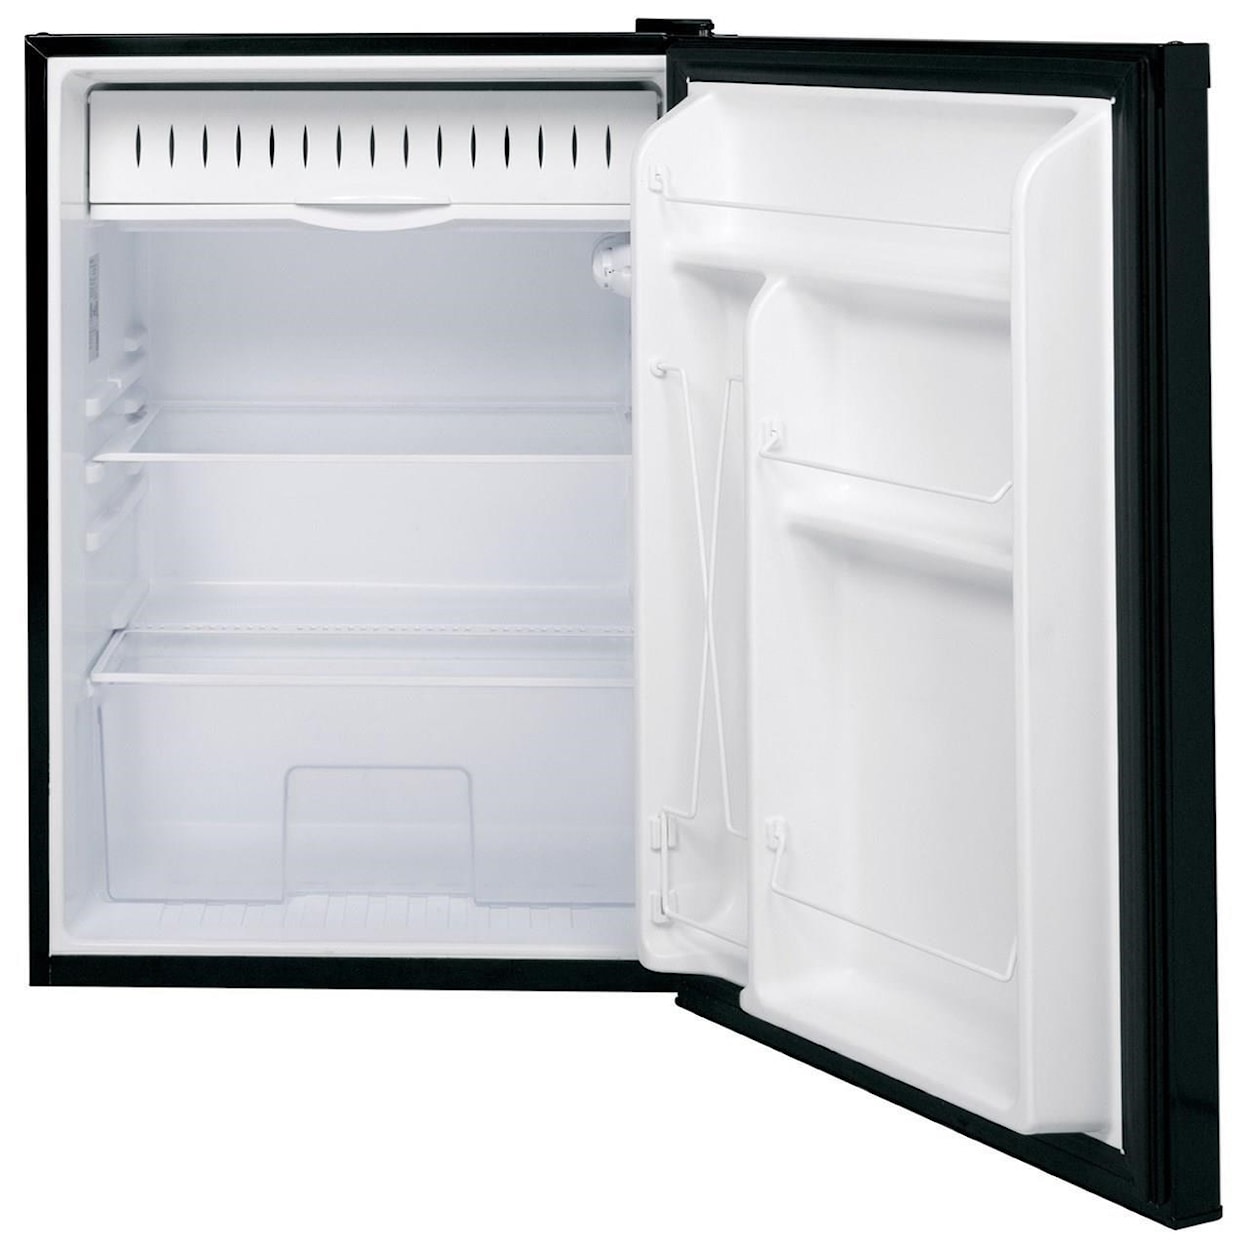 GE Appliances Compact Refrigerators 5.6 Cu. Ft.  Compact Refrigerator